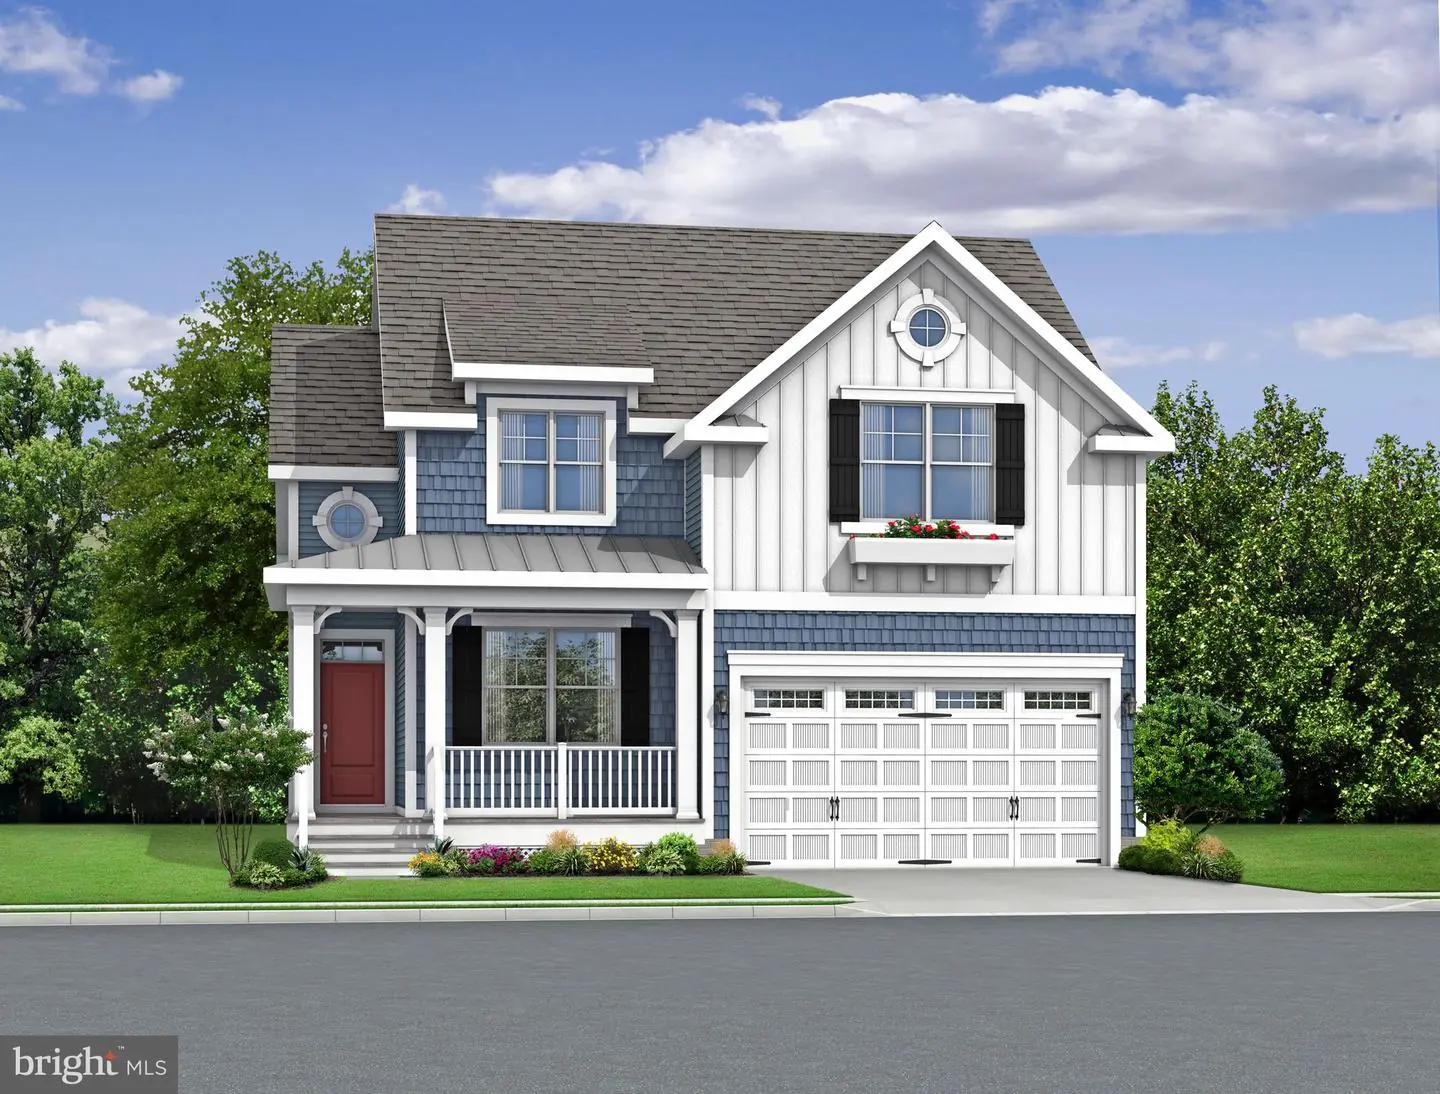 DESU2031440-801988062176-2022-11-02-11-01-30 Iris To-be-built Home Tbd | Millsboro, DE Real Estate For Sale | MLS# Desu2031440  - Lisa Mathena Real Estate